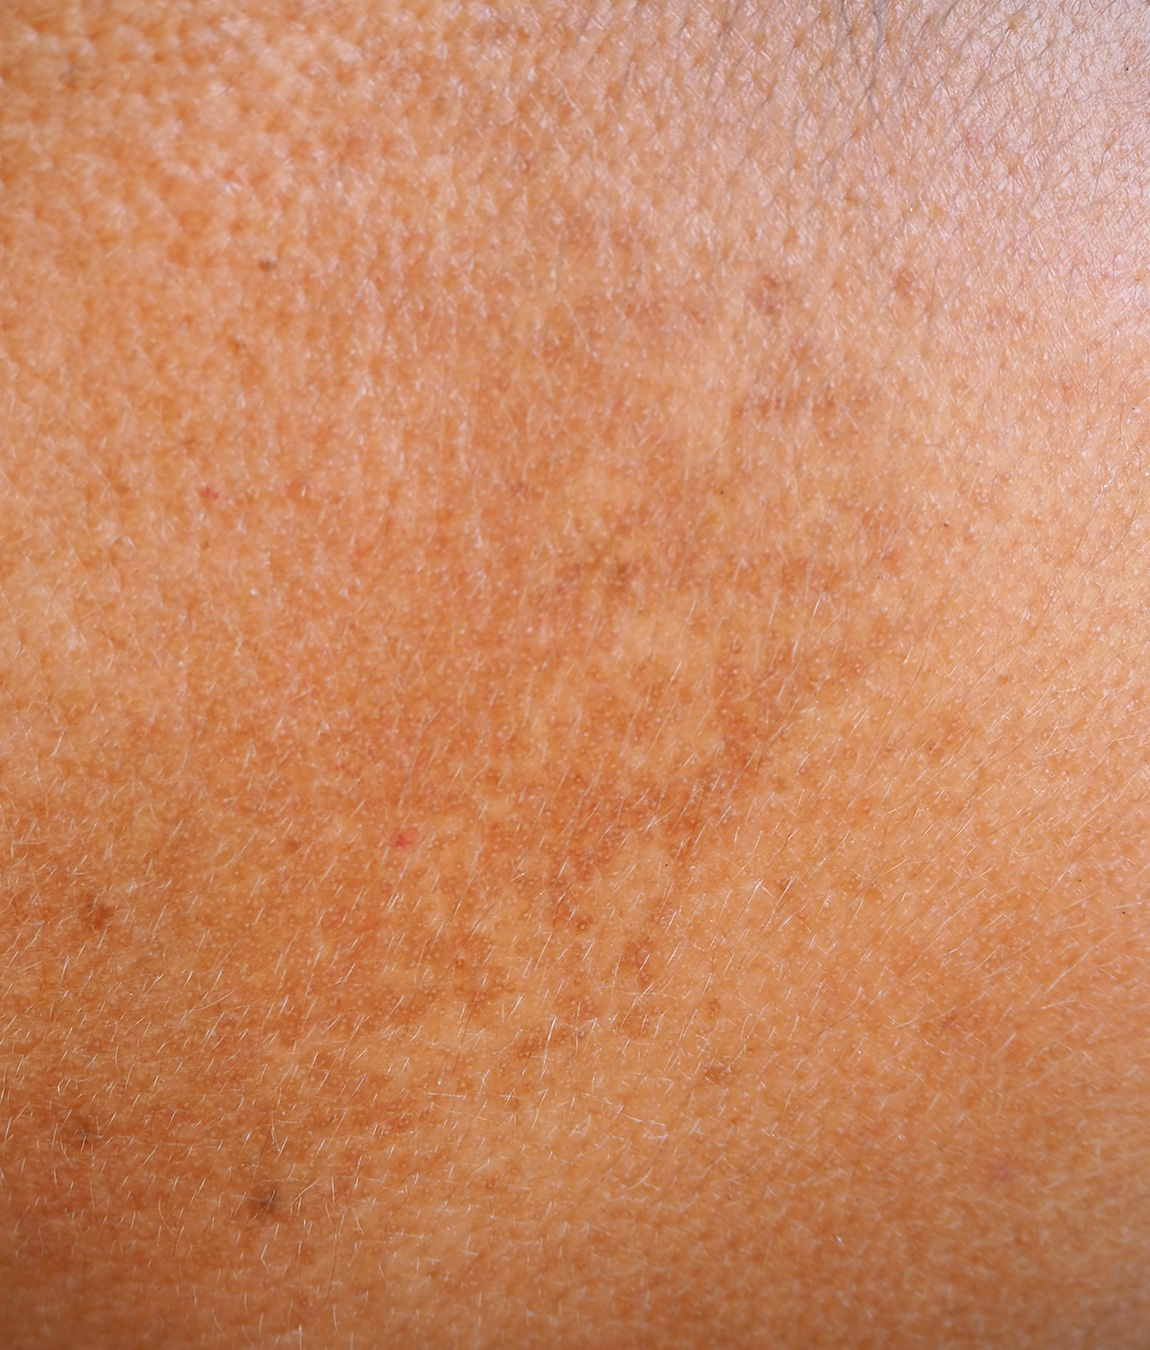 Close-up on hyperpigmentation